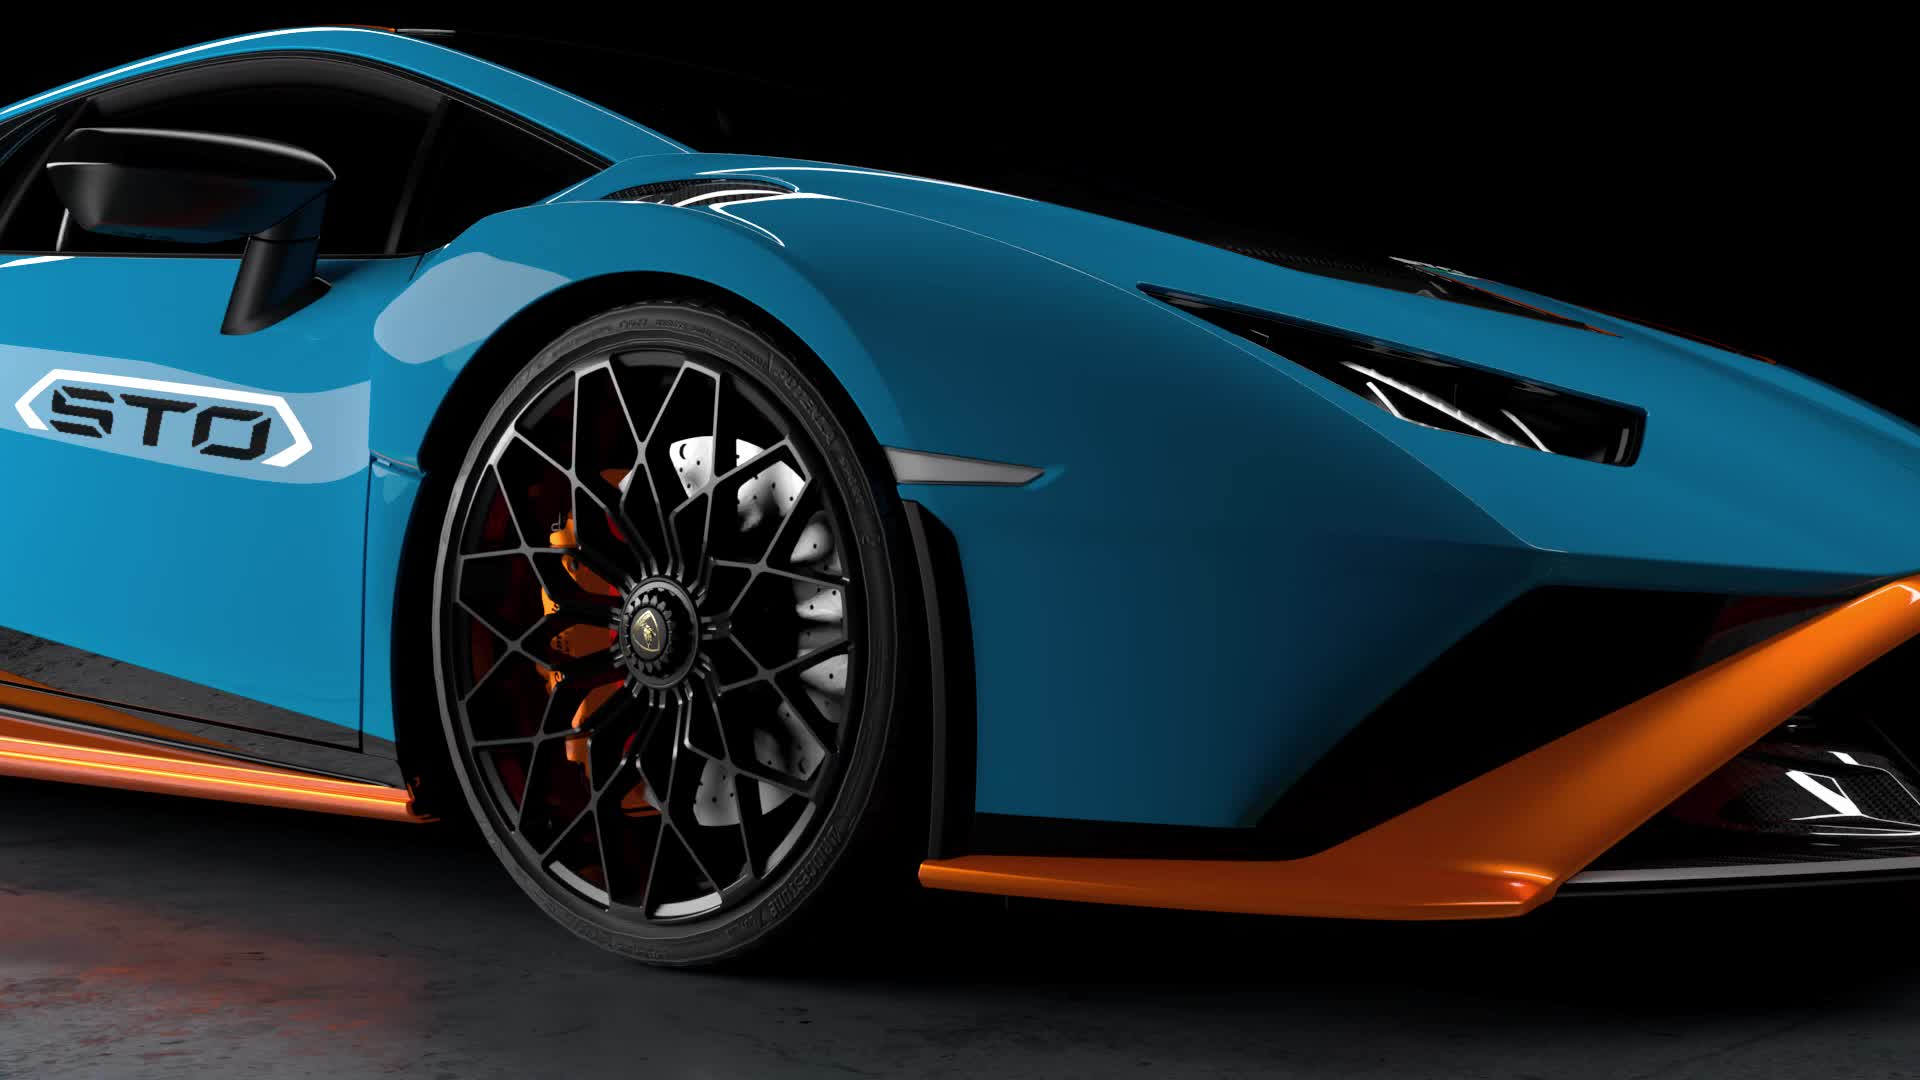 STICKERS 3D Decals Lamborghini Automobili Squadra Corse OFFICIAL Pack of 4 CA 